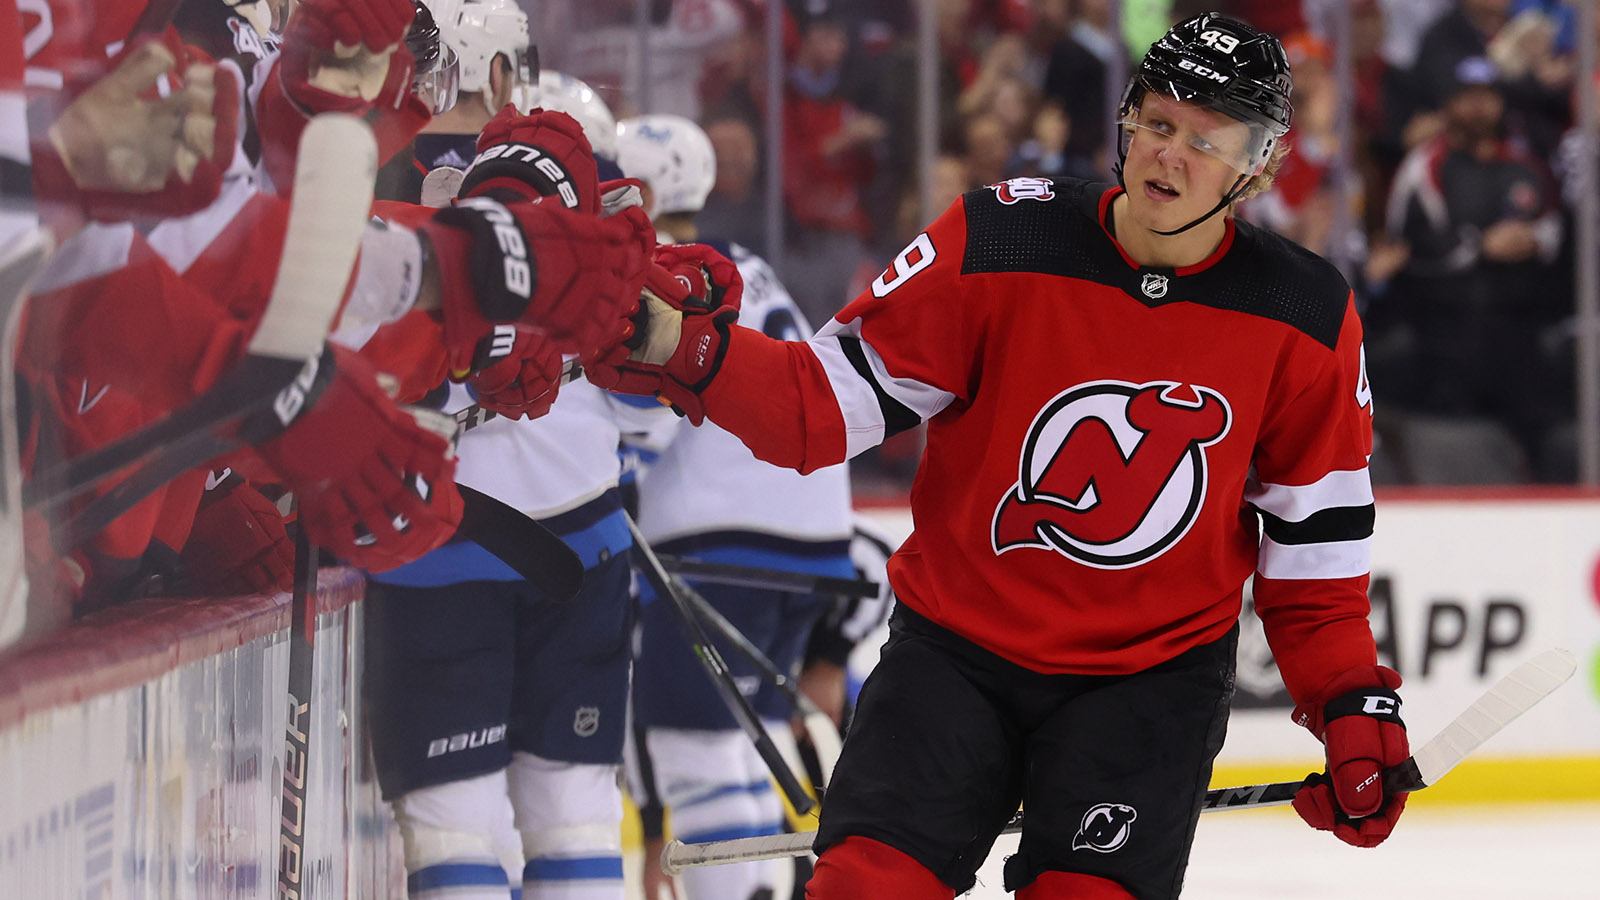 New Jersey Devils' AHL Prospects - The Hockey News